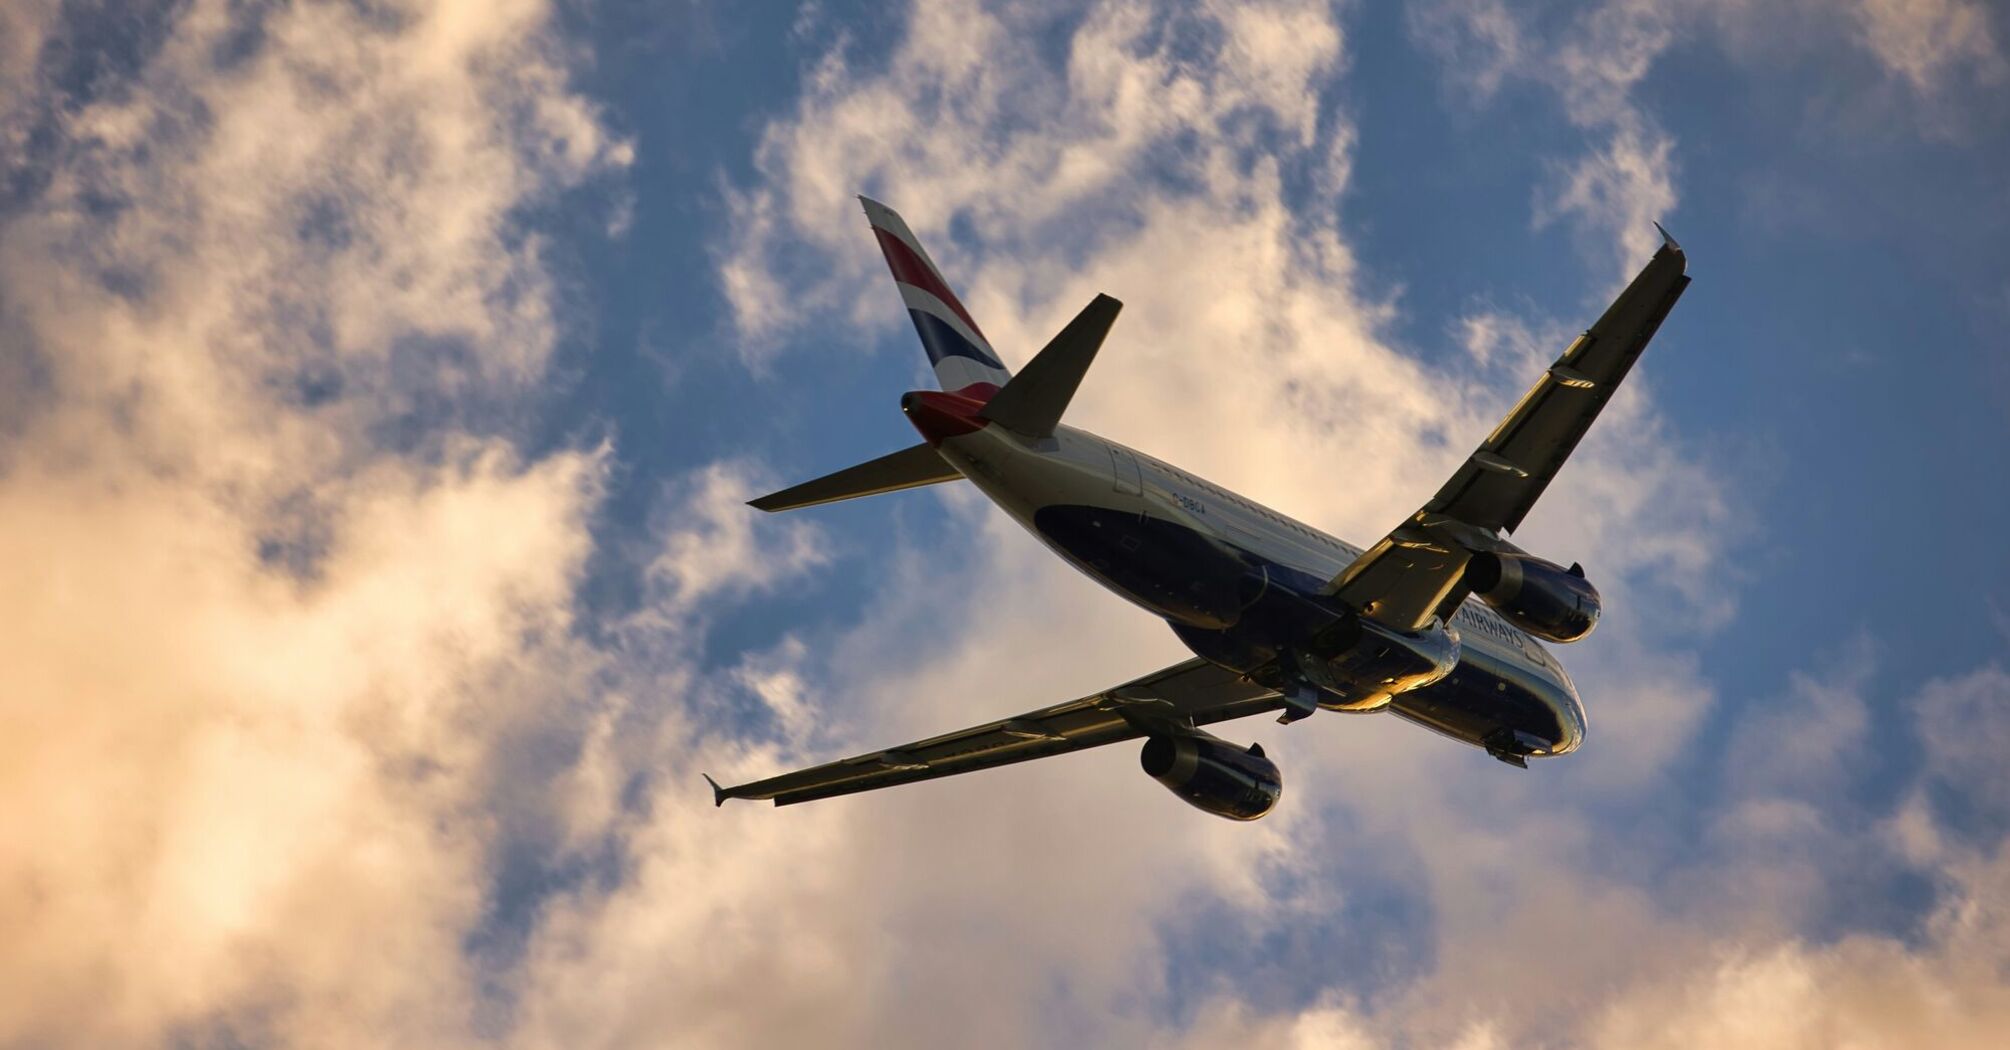 The British Airways plane made an emergency landing in Edinburgh: the reason